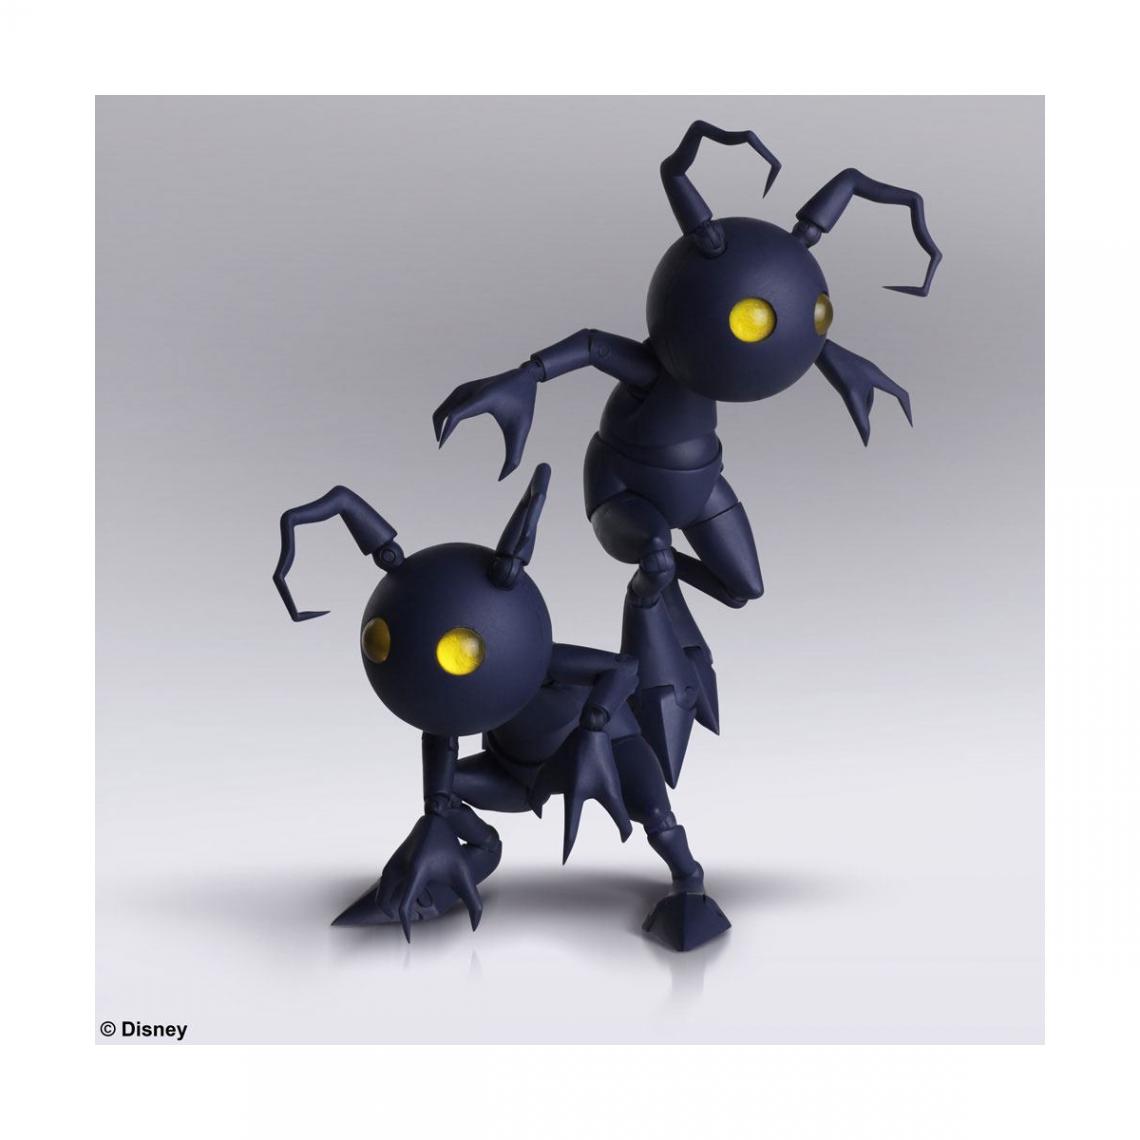 Square Enix - Kingdom Hearts III Bring Arts - Figurines set 2 Shadow 10 cm - Mangas